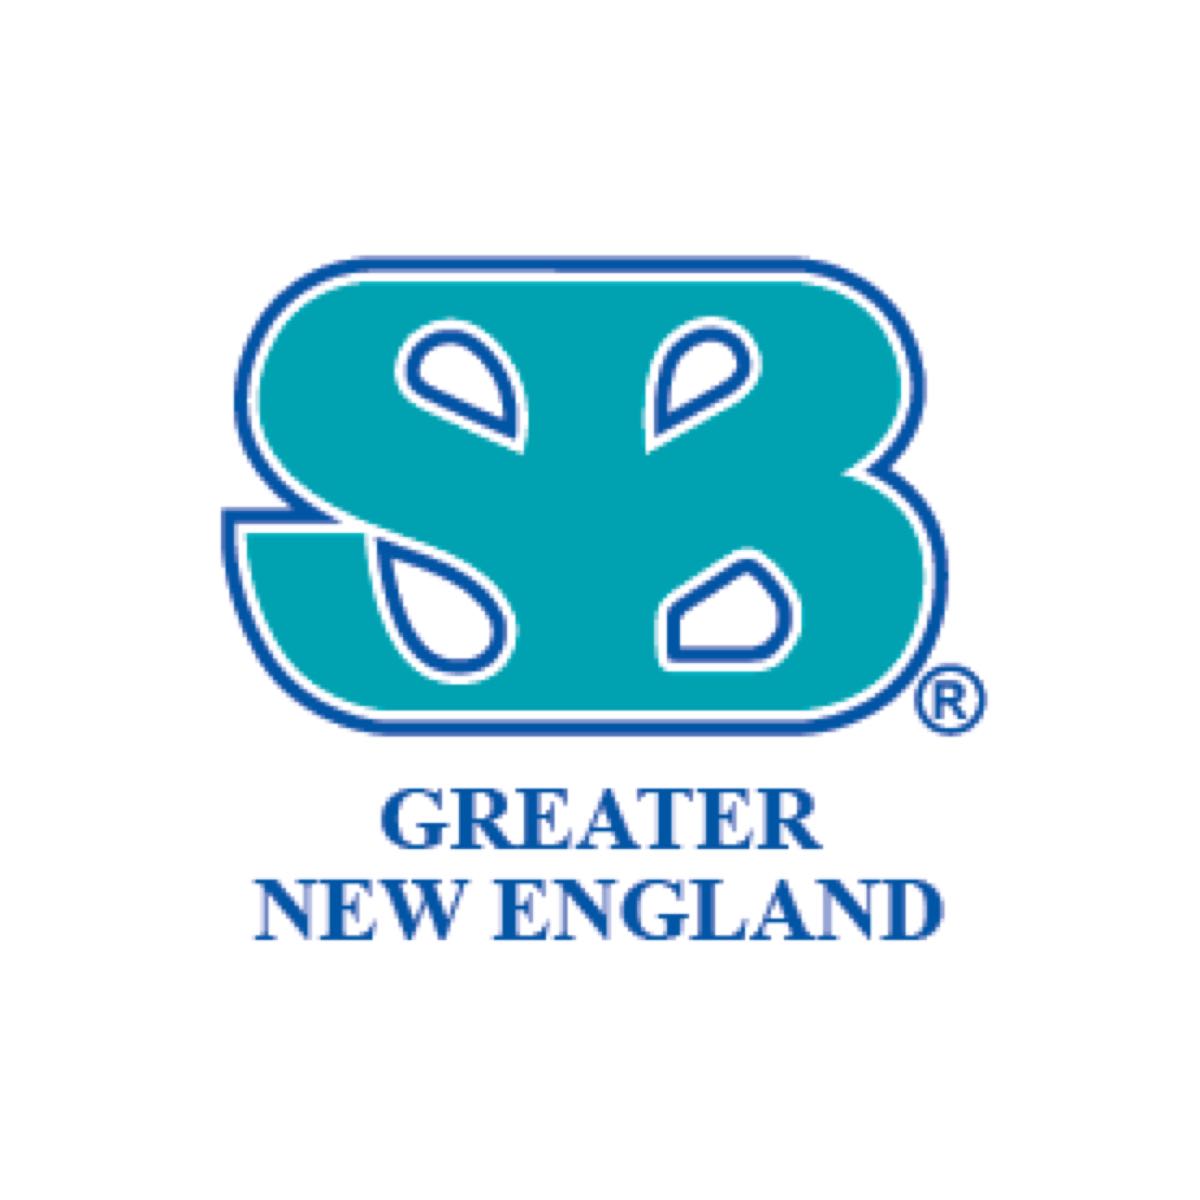 Spina Bifida Association Of Greater New England Logo Image